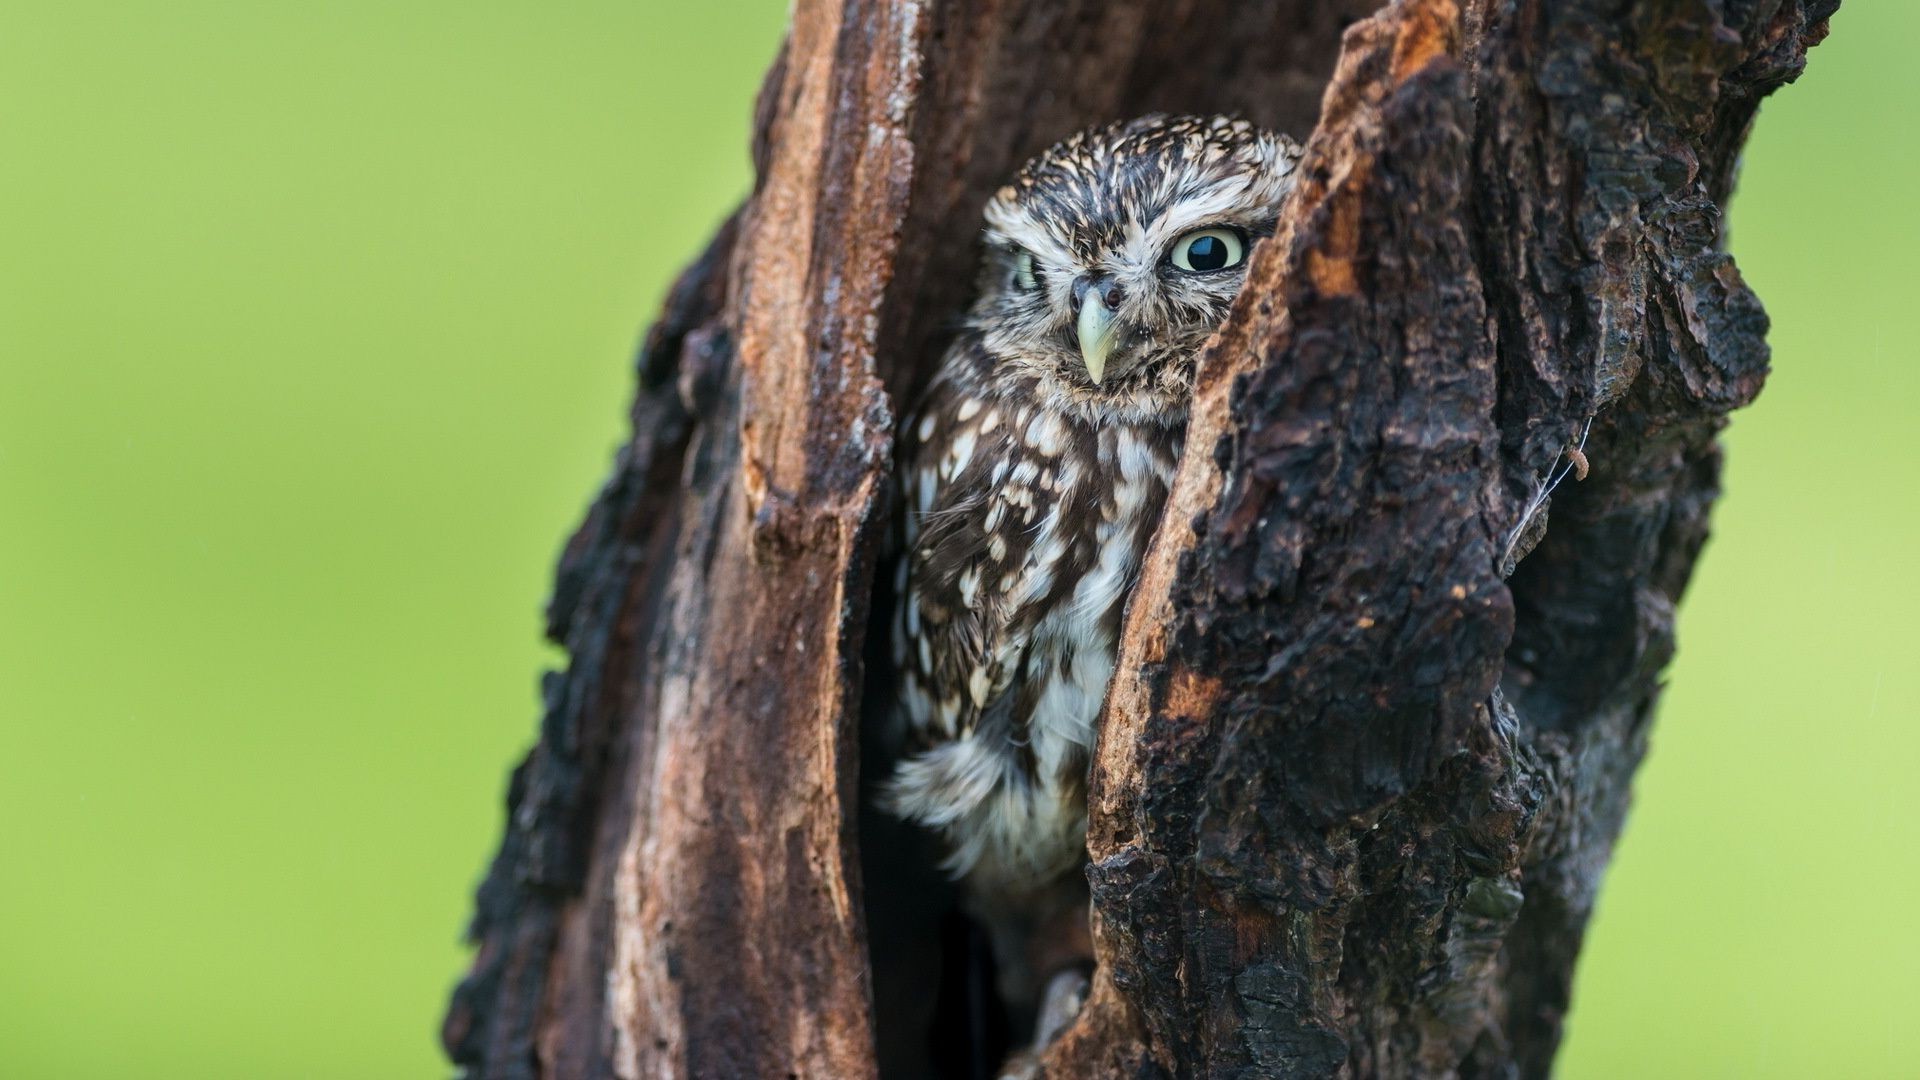 animals wildlife bird nature owl outdoors portrait animal tree eye